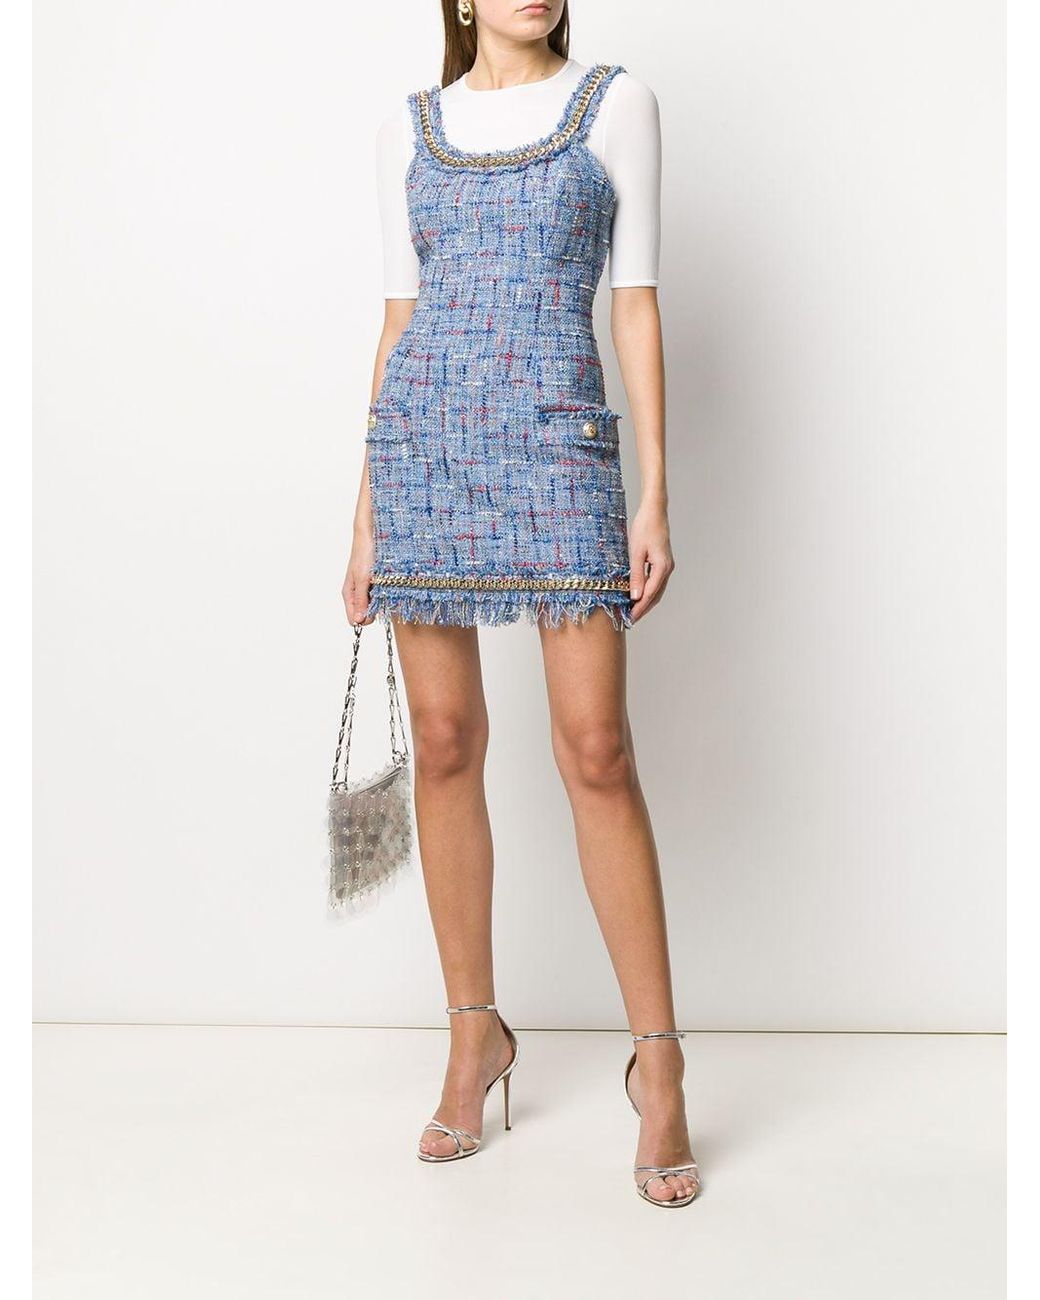 Balmain Tweed Chain Short Dress in Blue | Lyst Canada